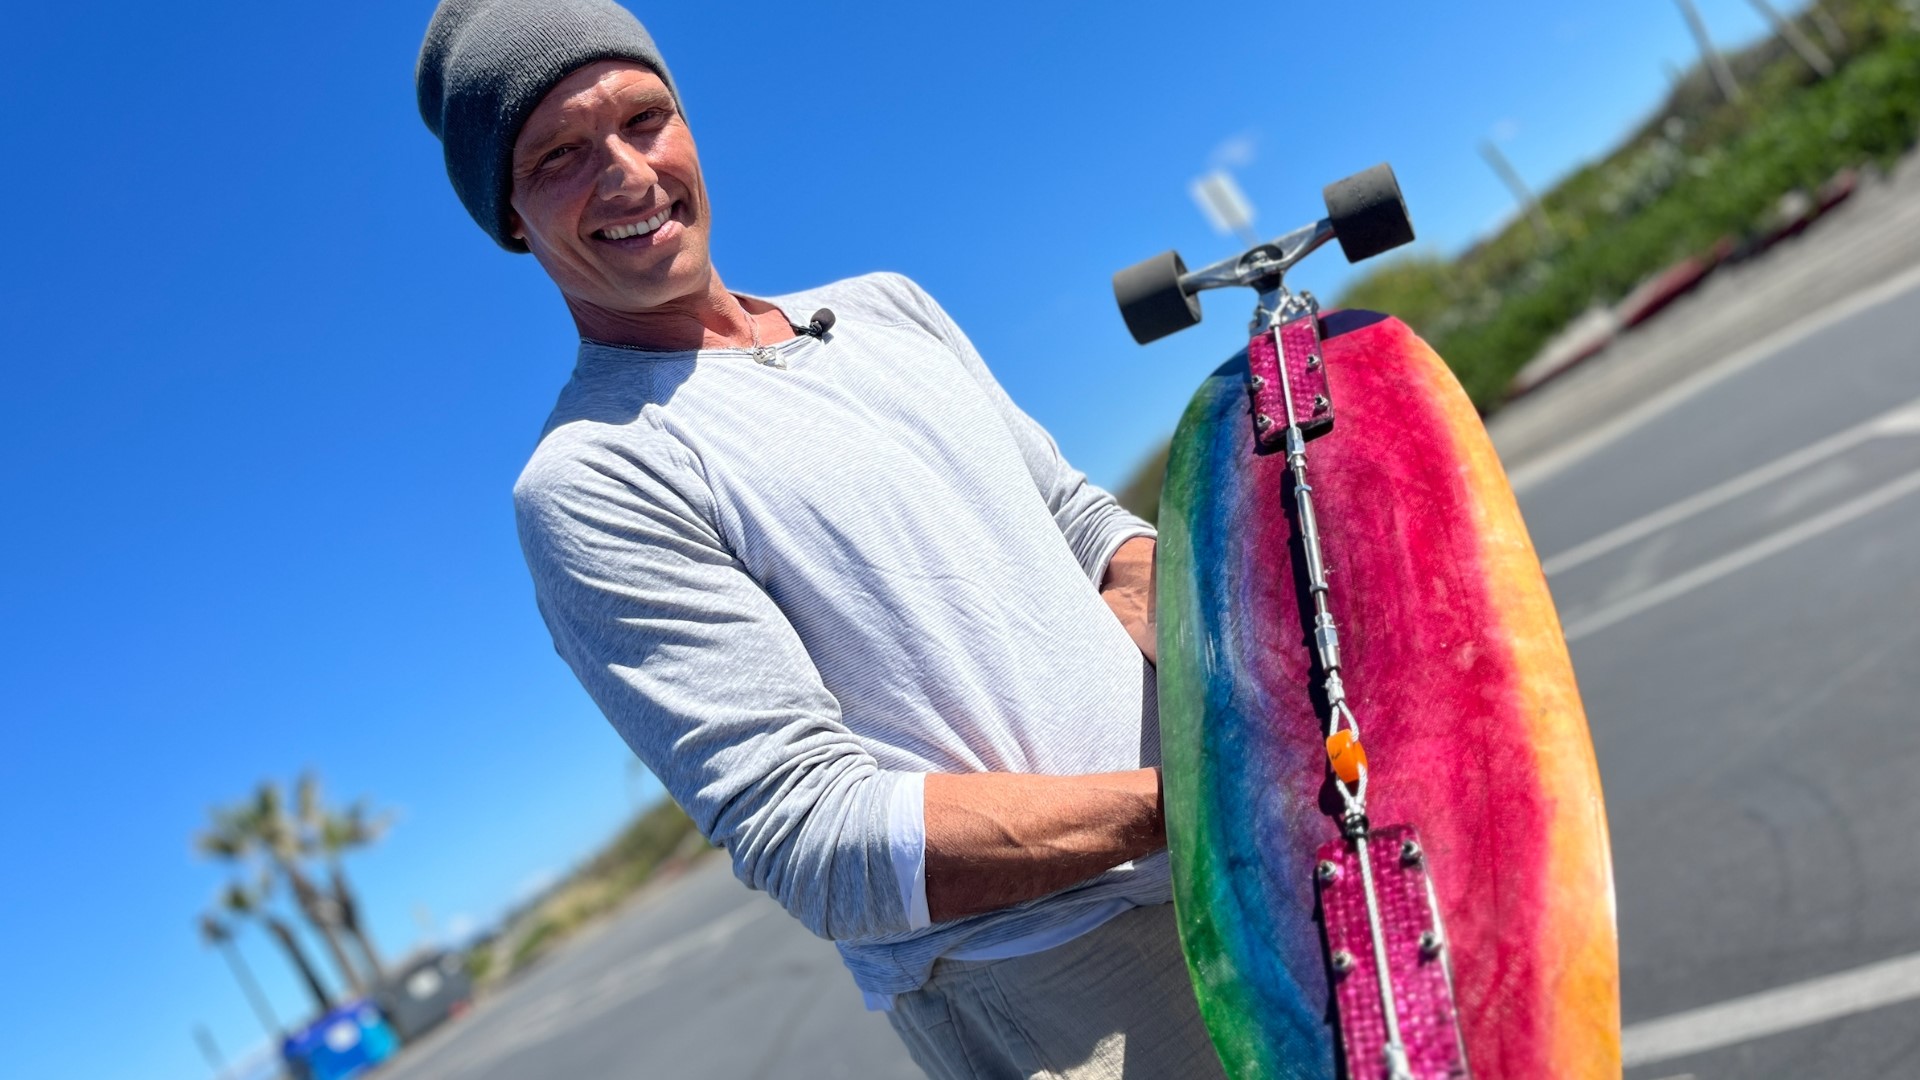 Longtime surfer Chris Corrente invented the Kuwmaz Carve System.